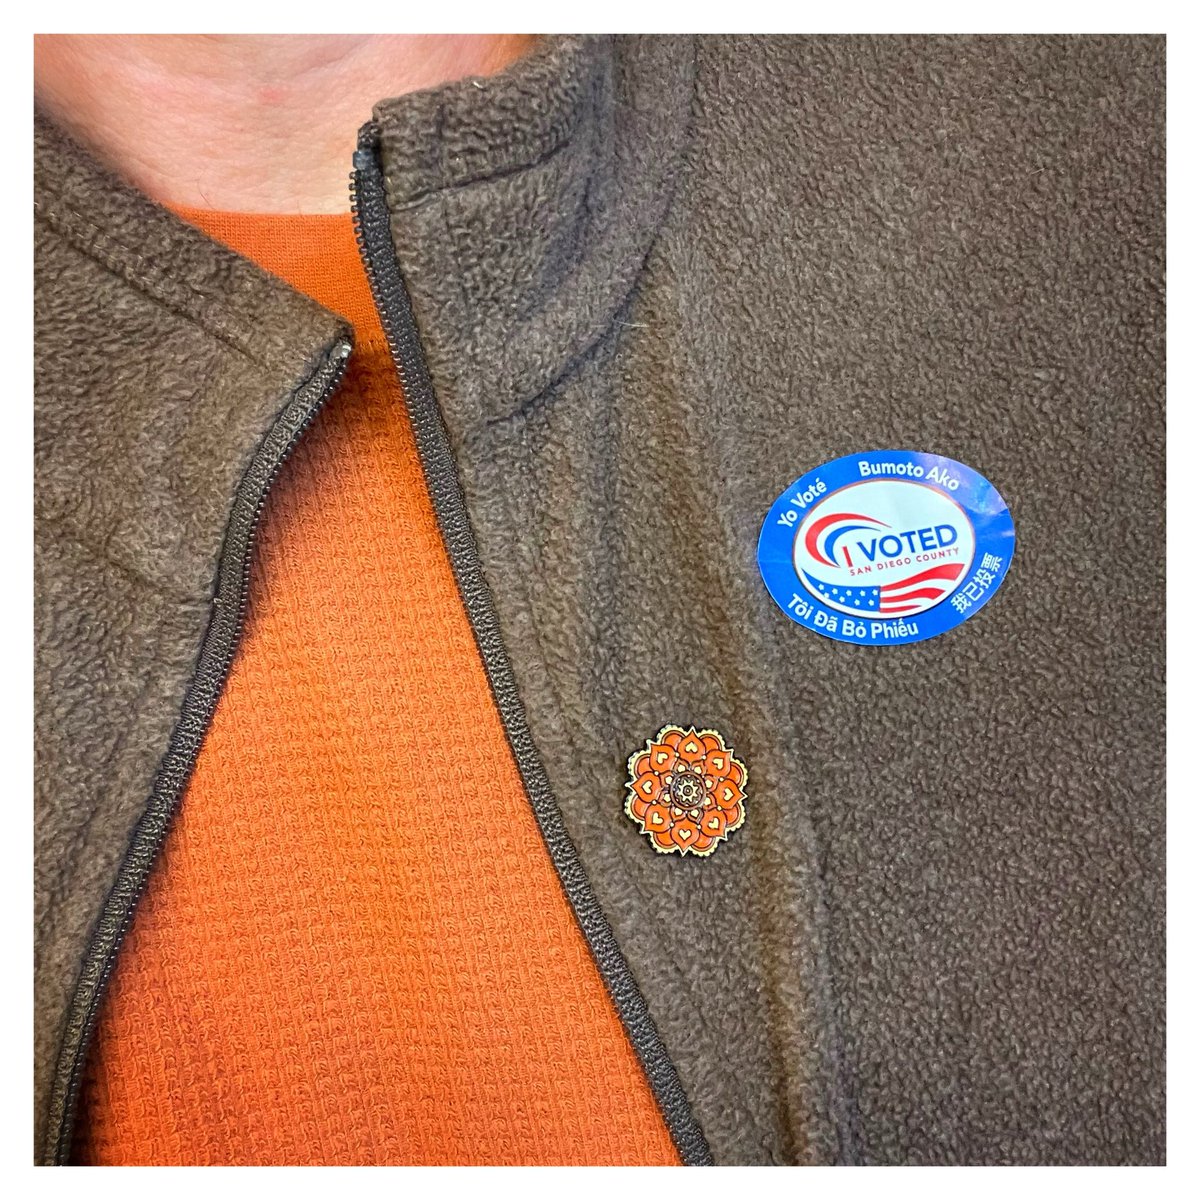 a privilege. 
#BeEngaged #VOTE 
👍🏼🙏🏼